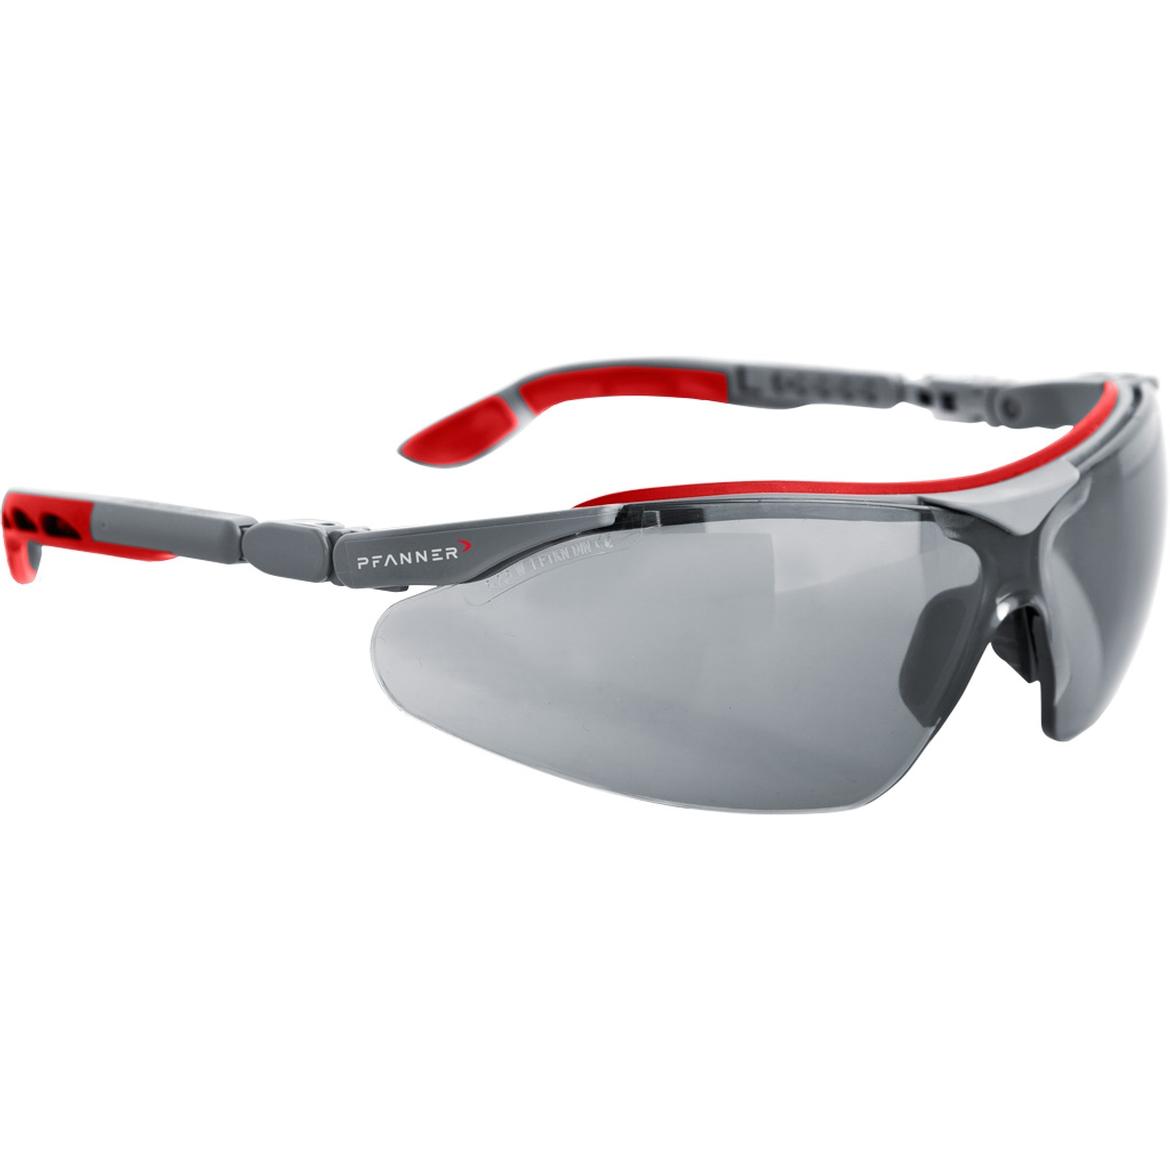 Pfanner Nexus Safety Glasses Smoke Grey - Radmore & Tucker